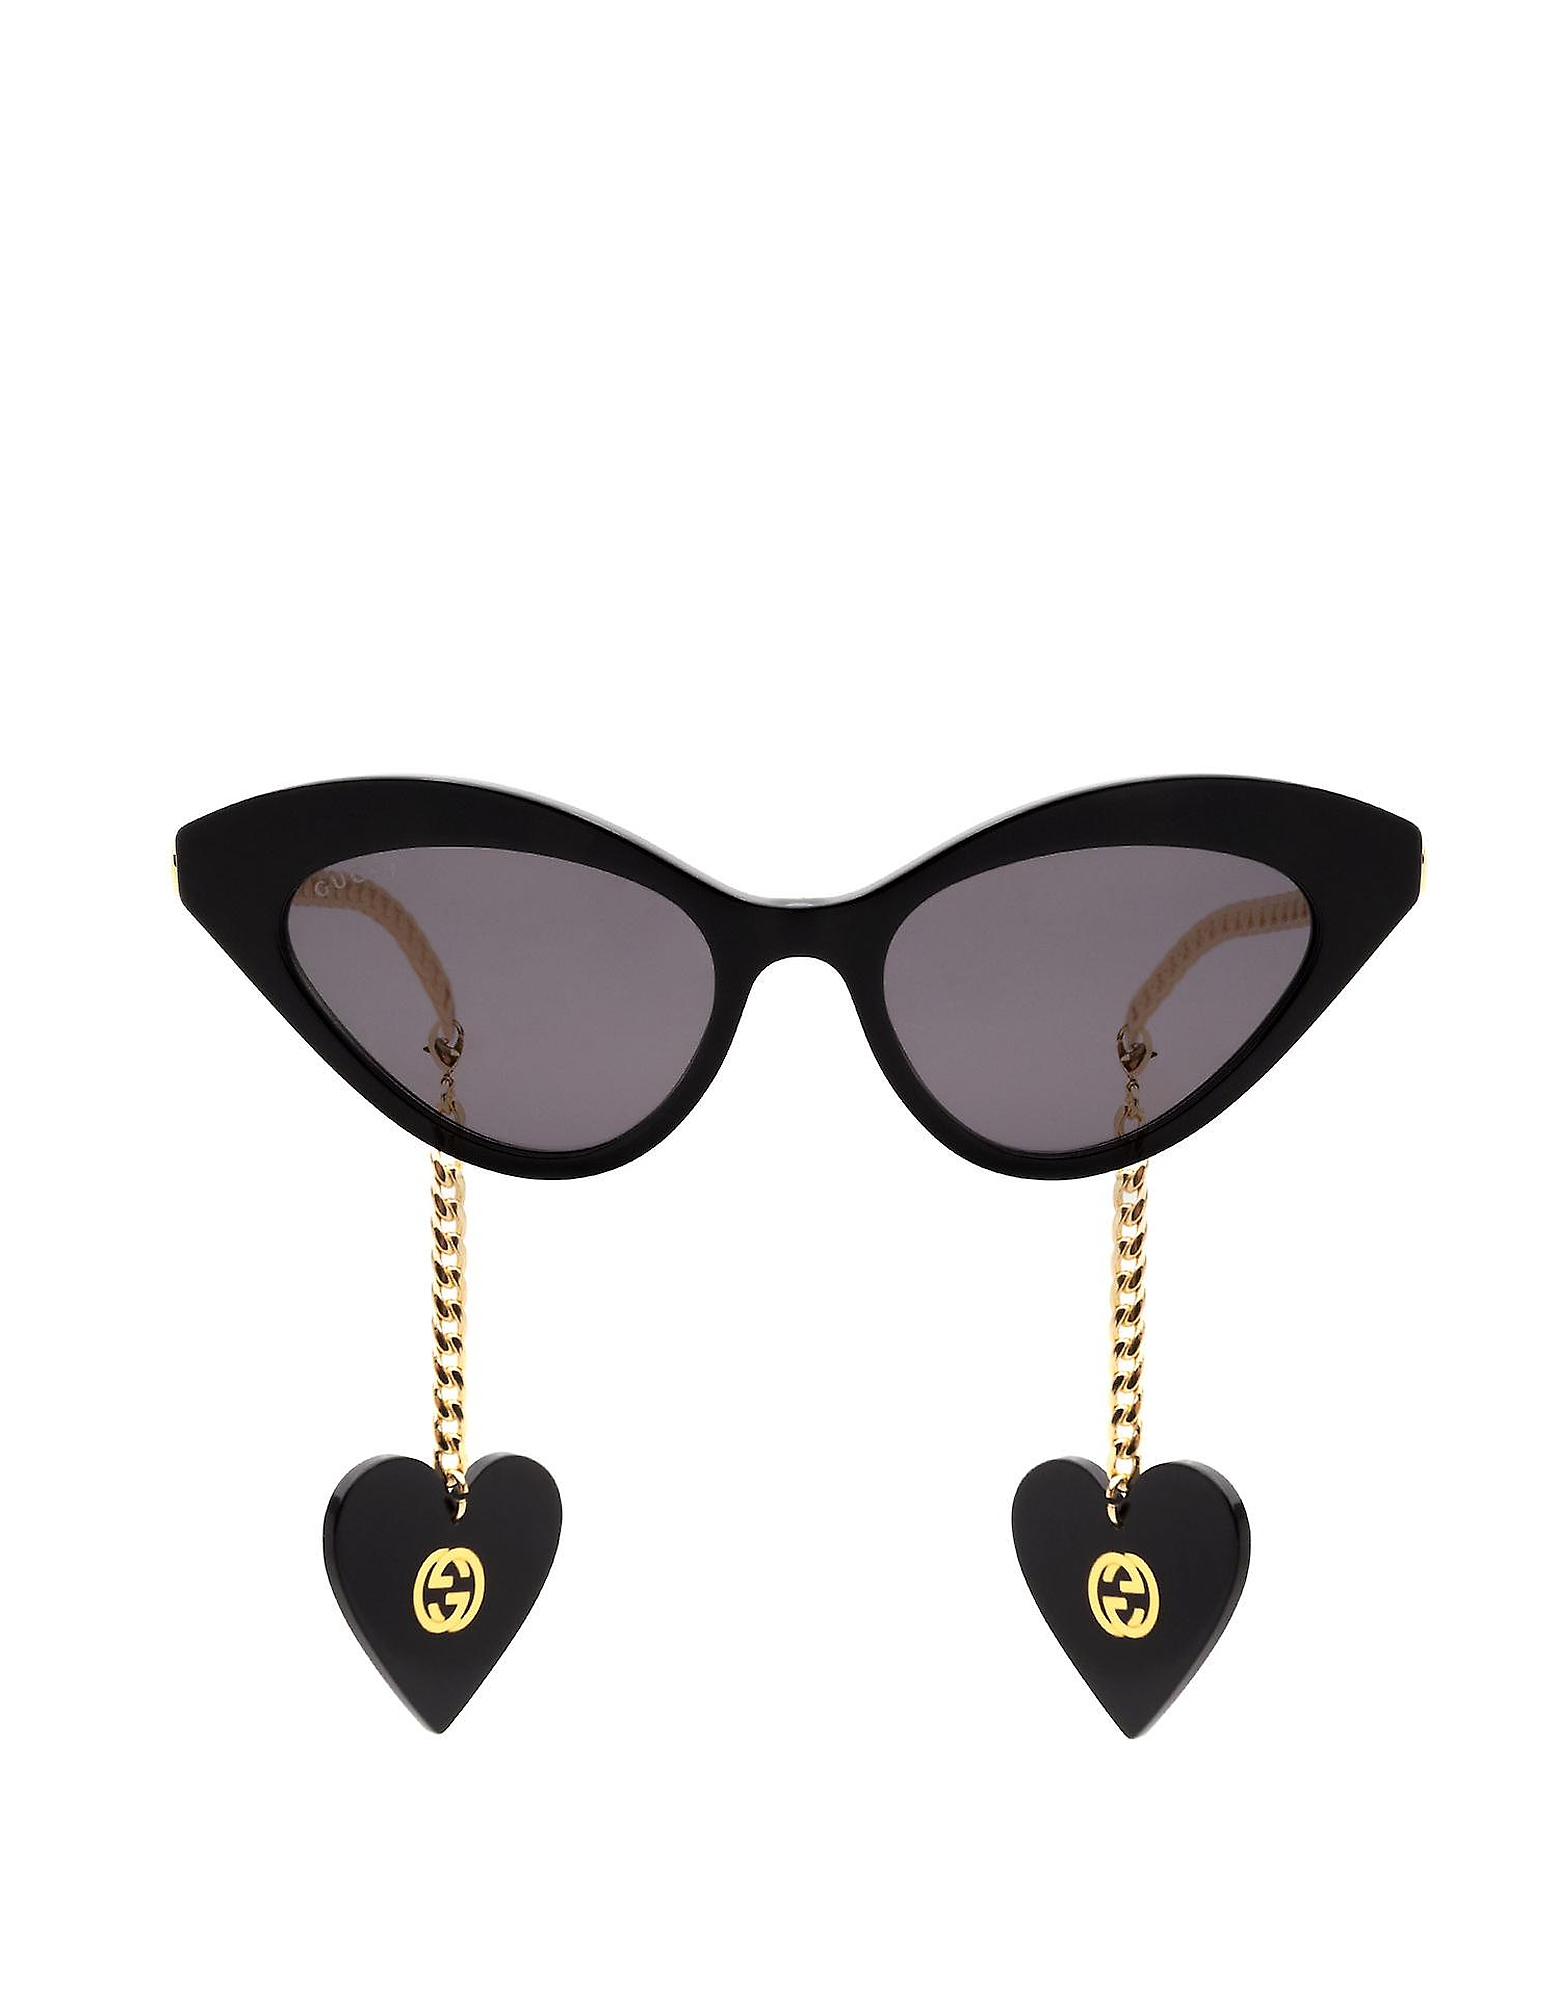 Gucci Sunglasses Black Cat-Eye frame Acetate Women's Sunglasses w/Charms